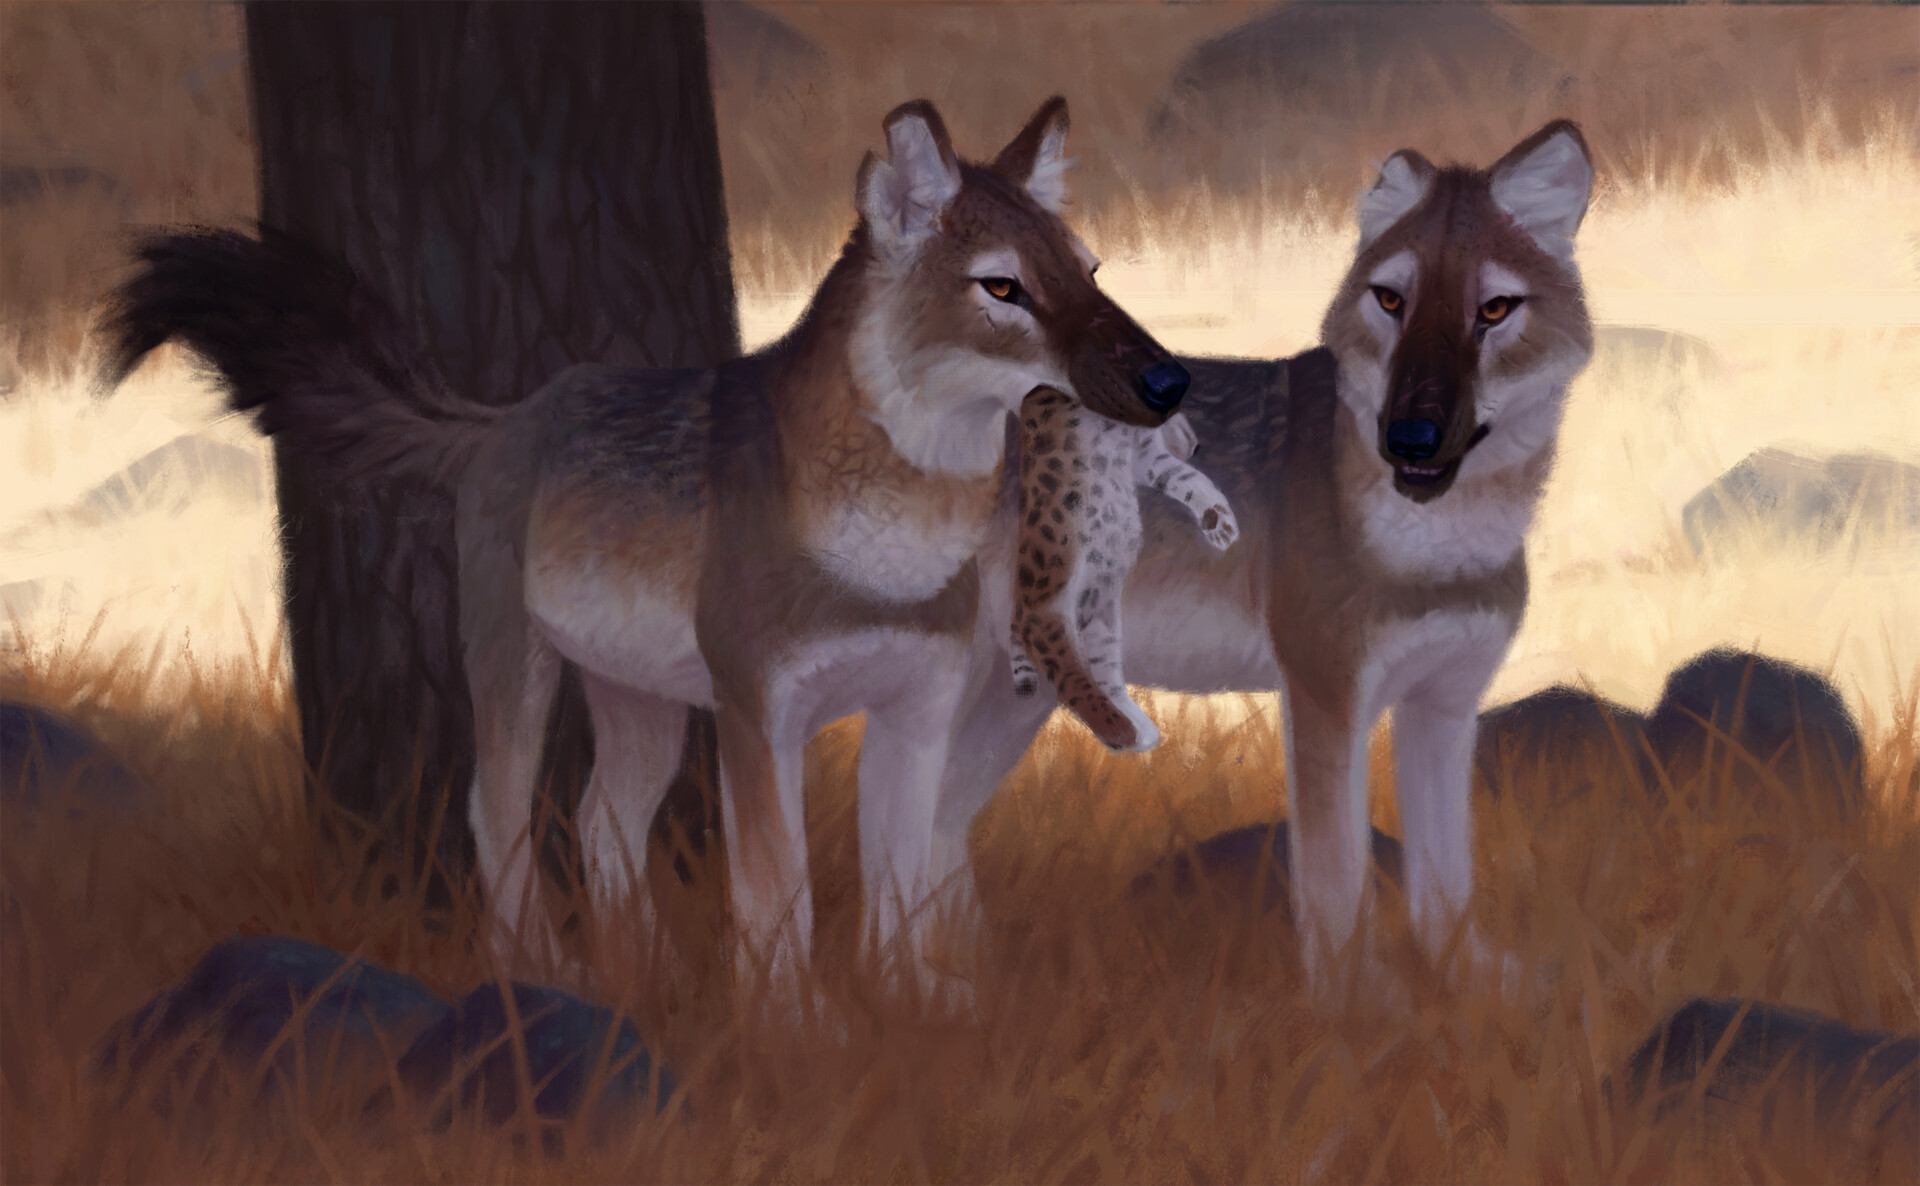 California, 50,000 years ago Two dire wolves came across a Smilodon den whi...